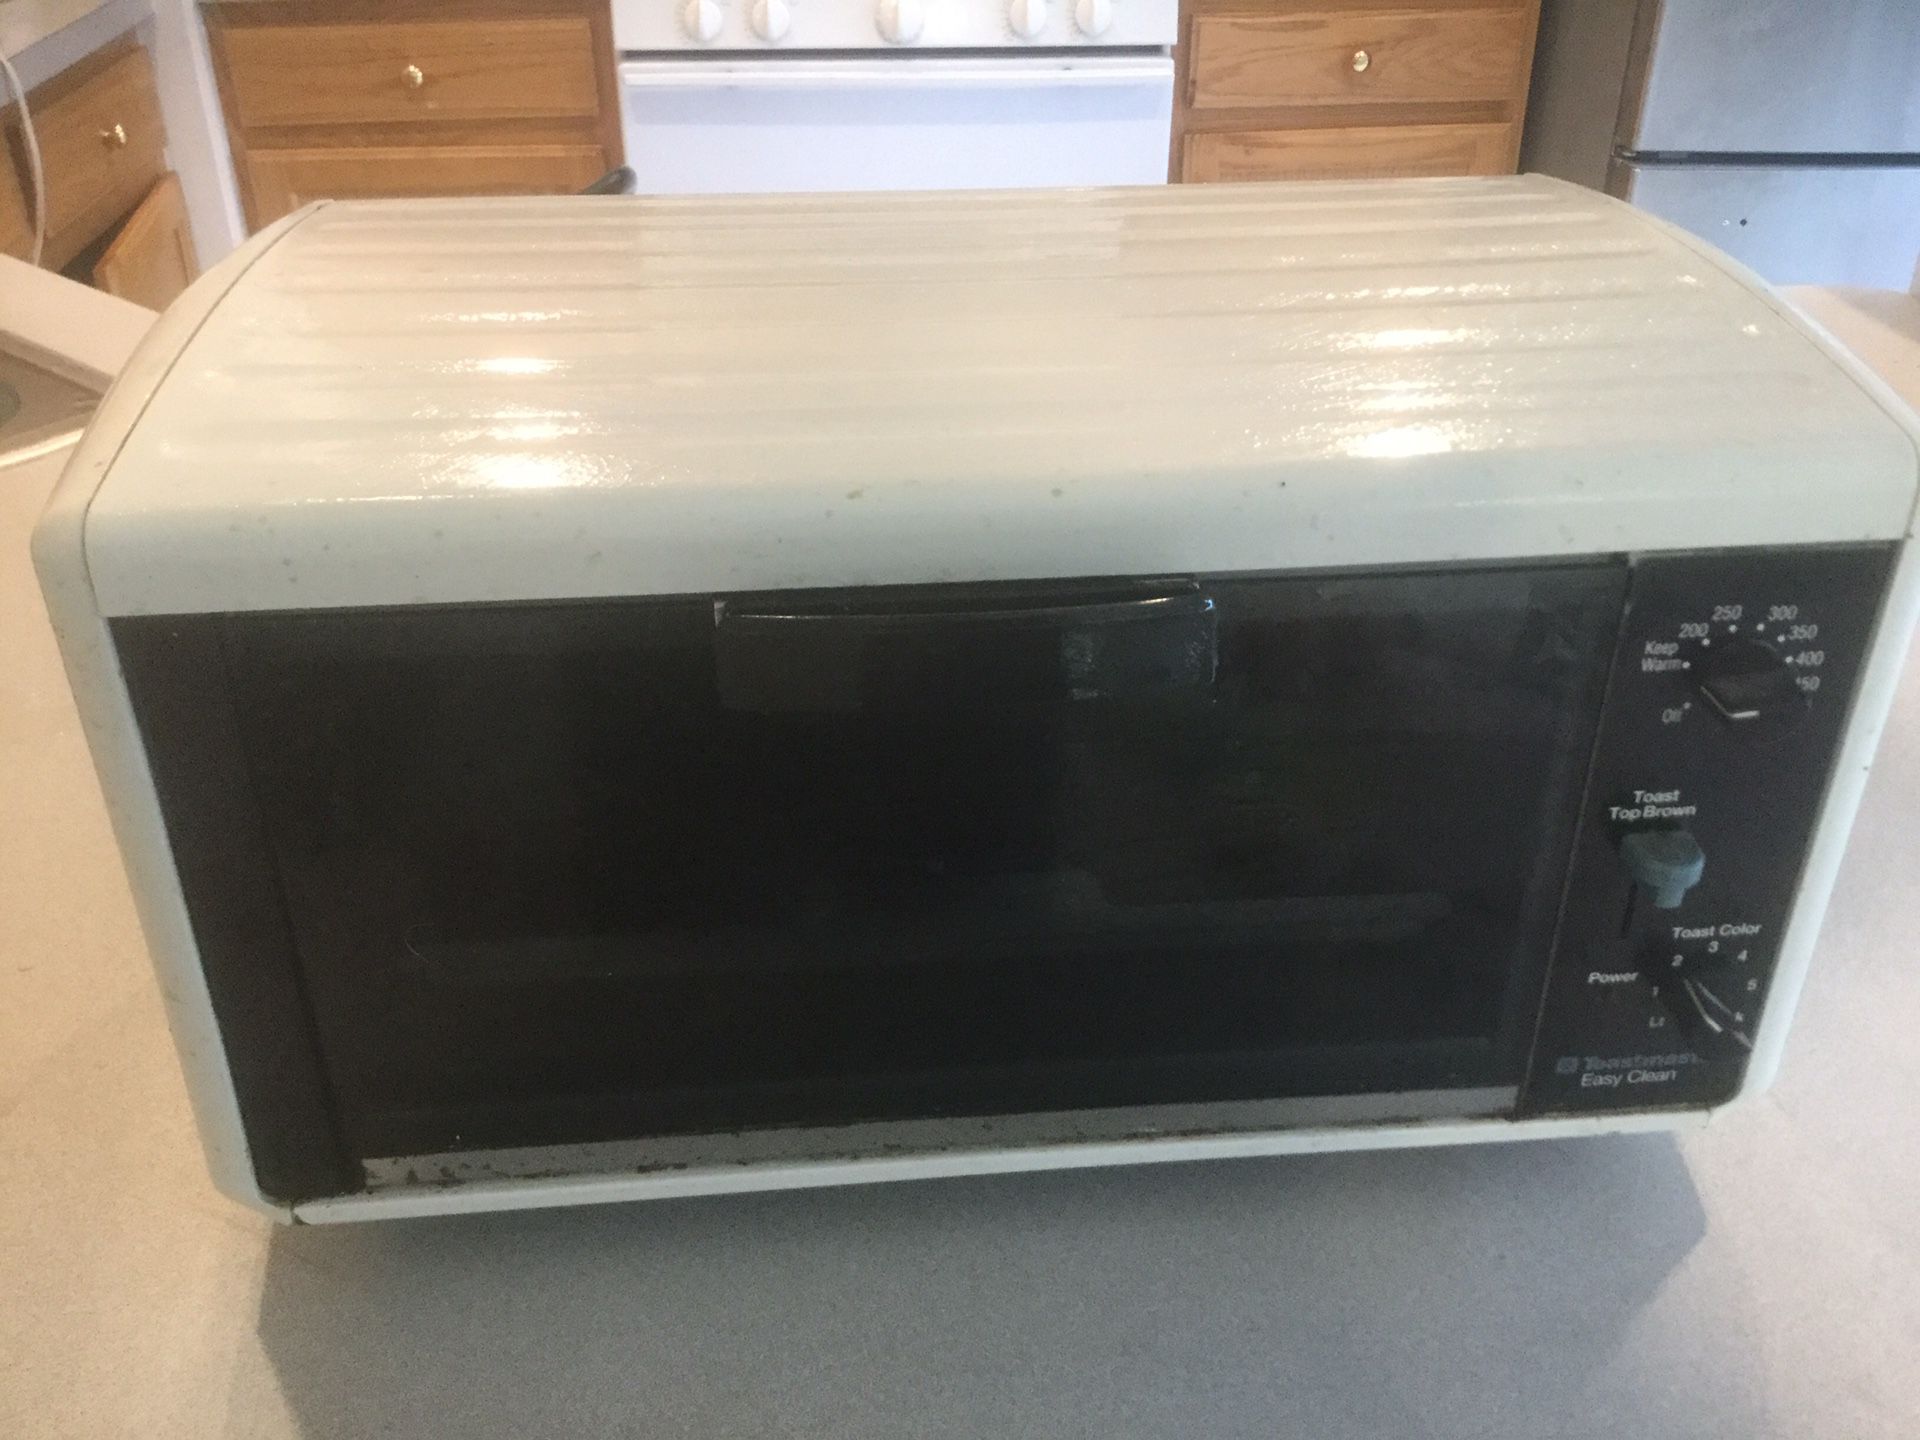 Vintage Antique toaster oven